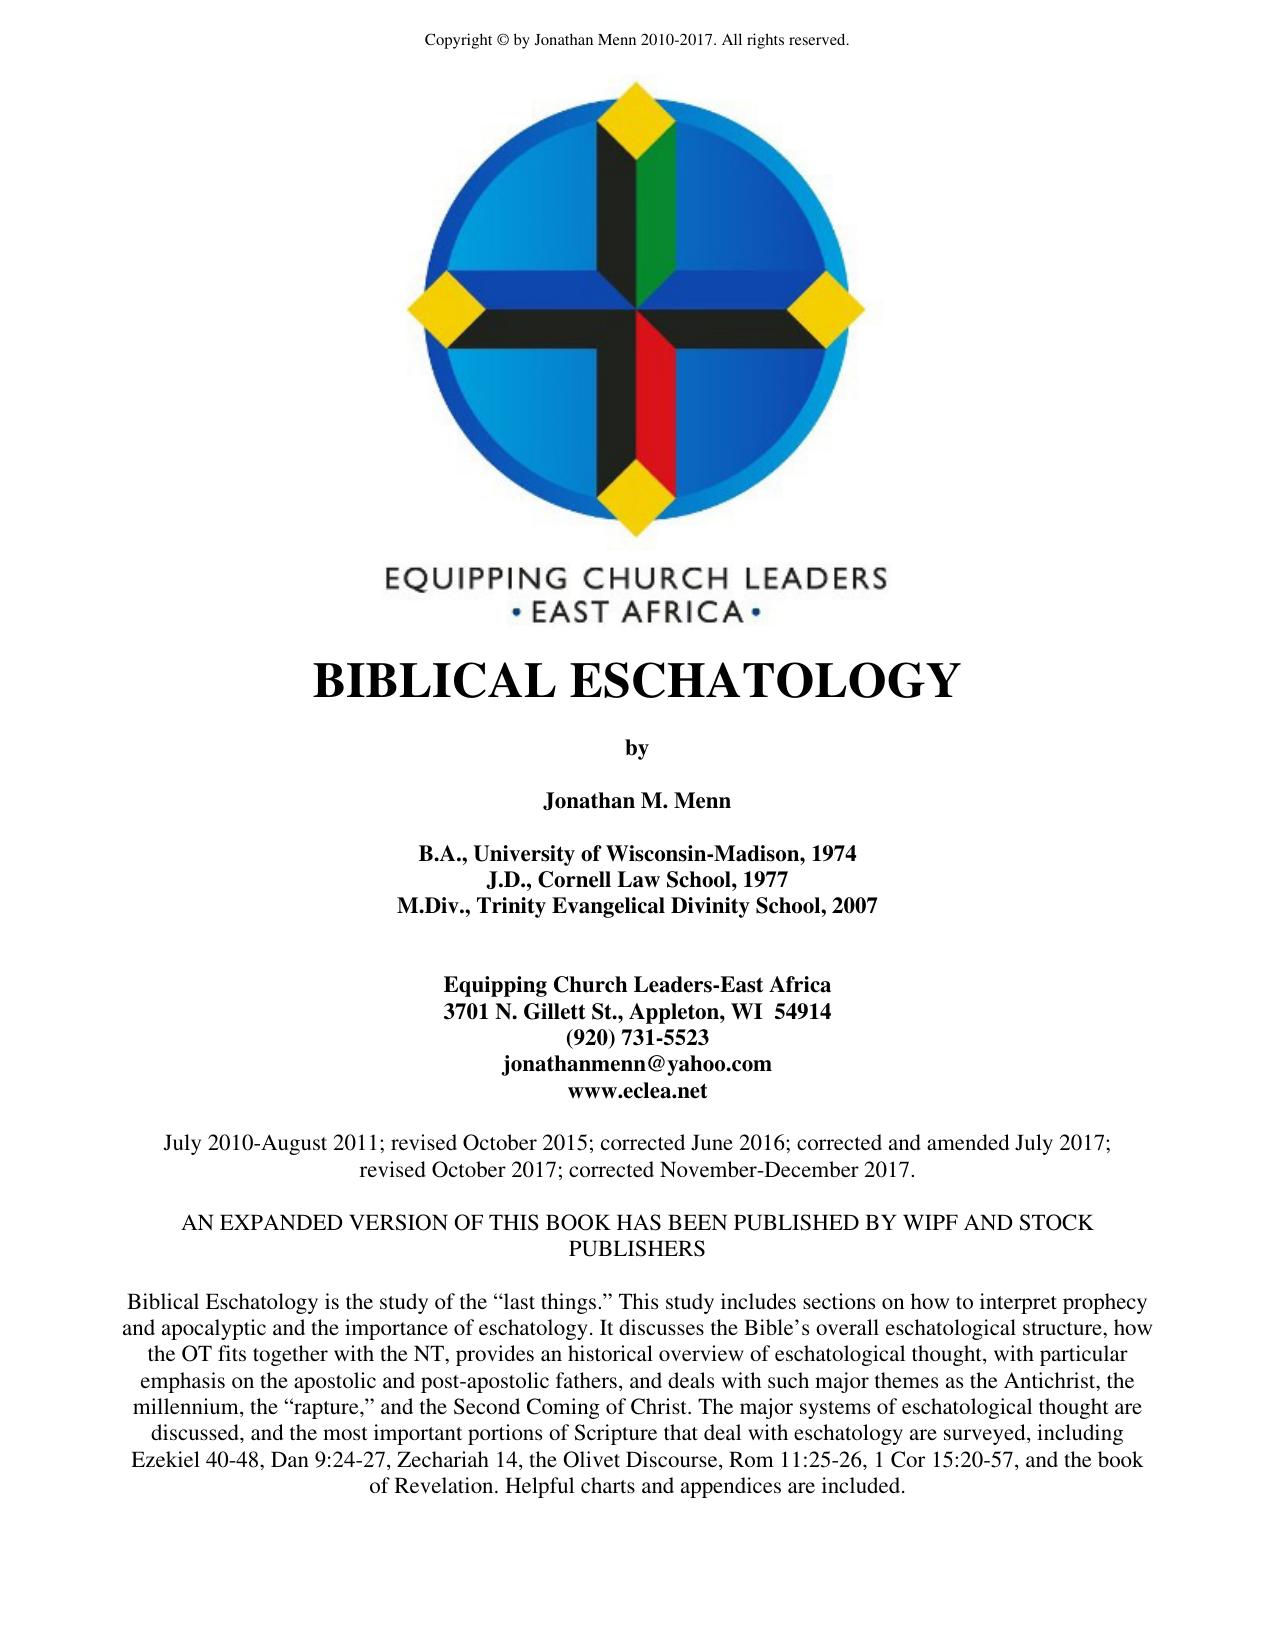 Microsoft Word - Biblical Eschatology (Menn)